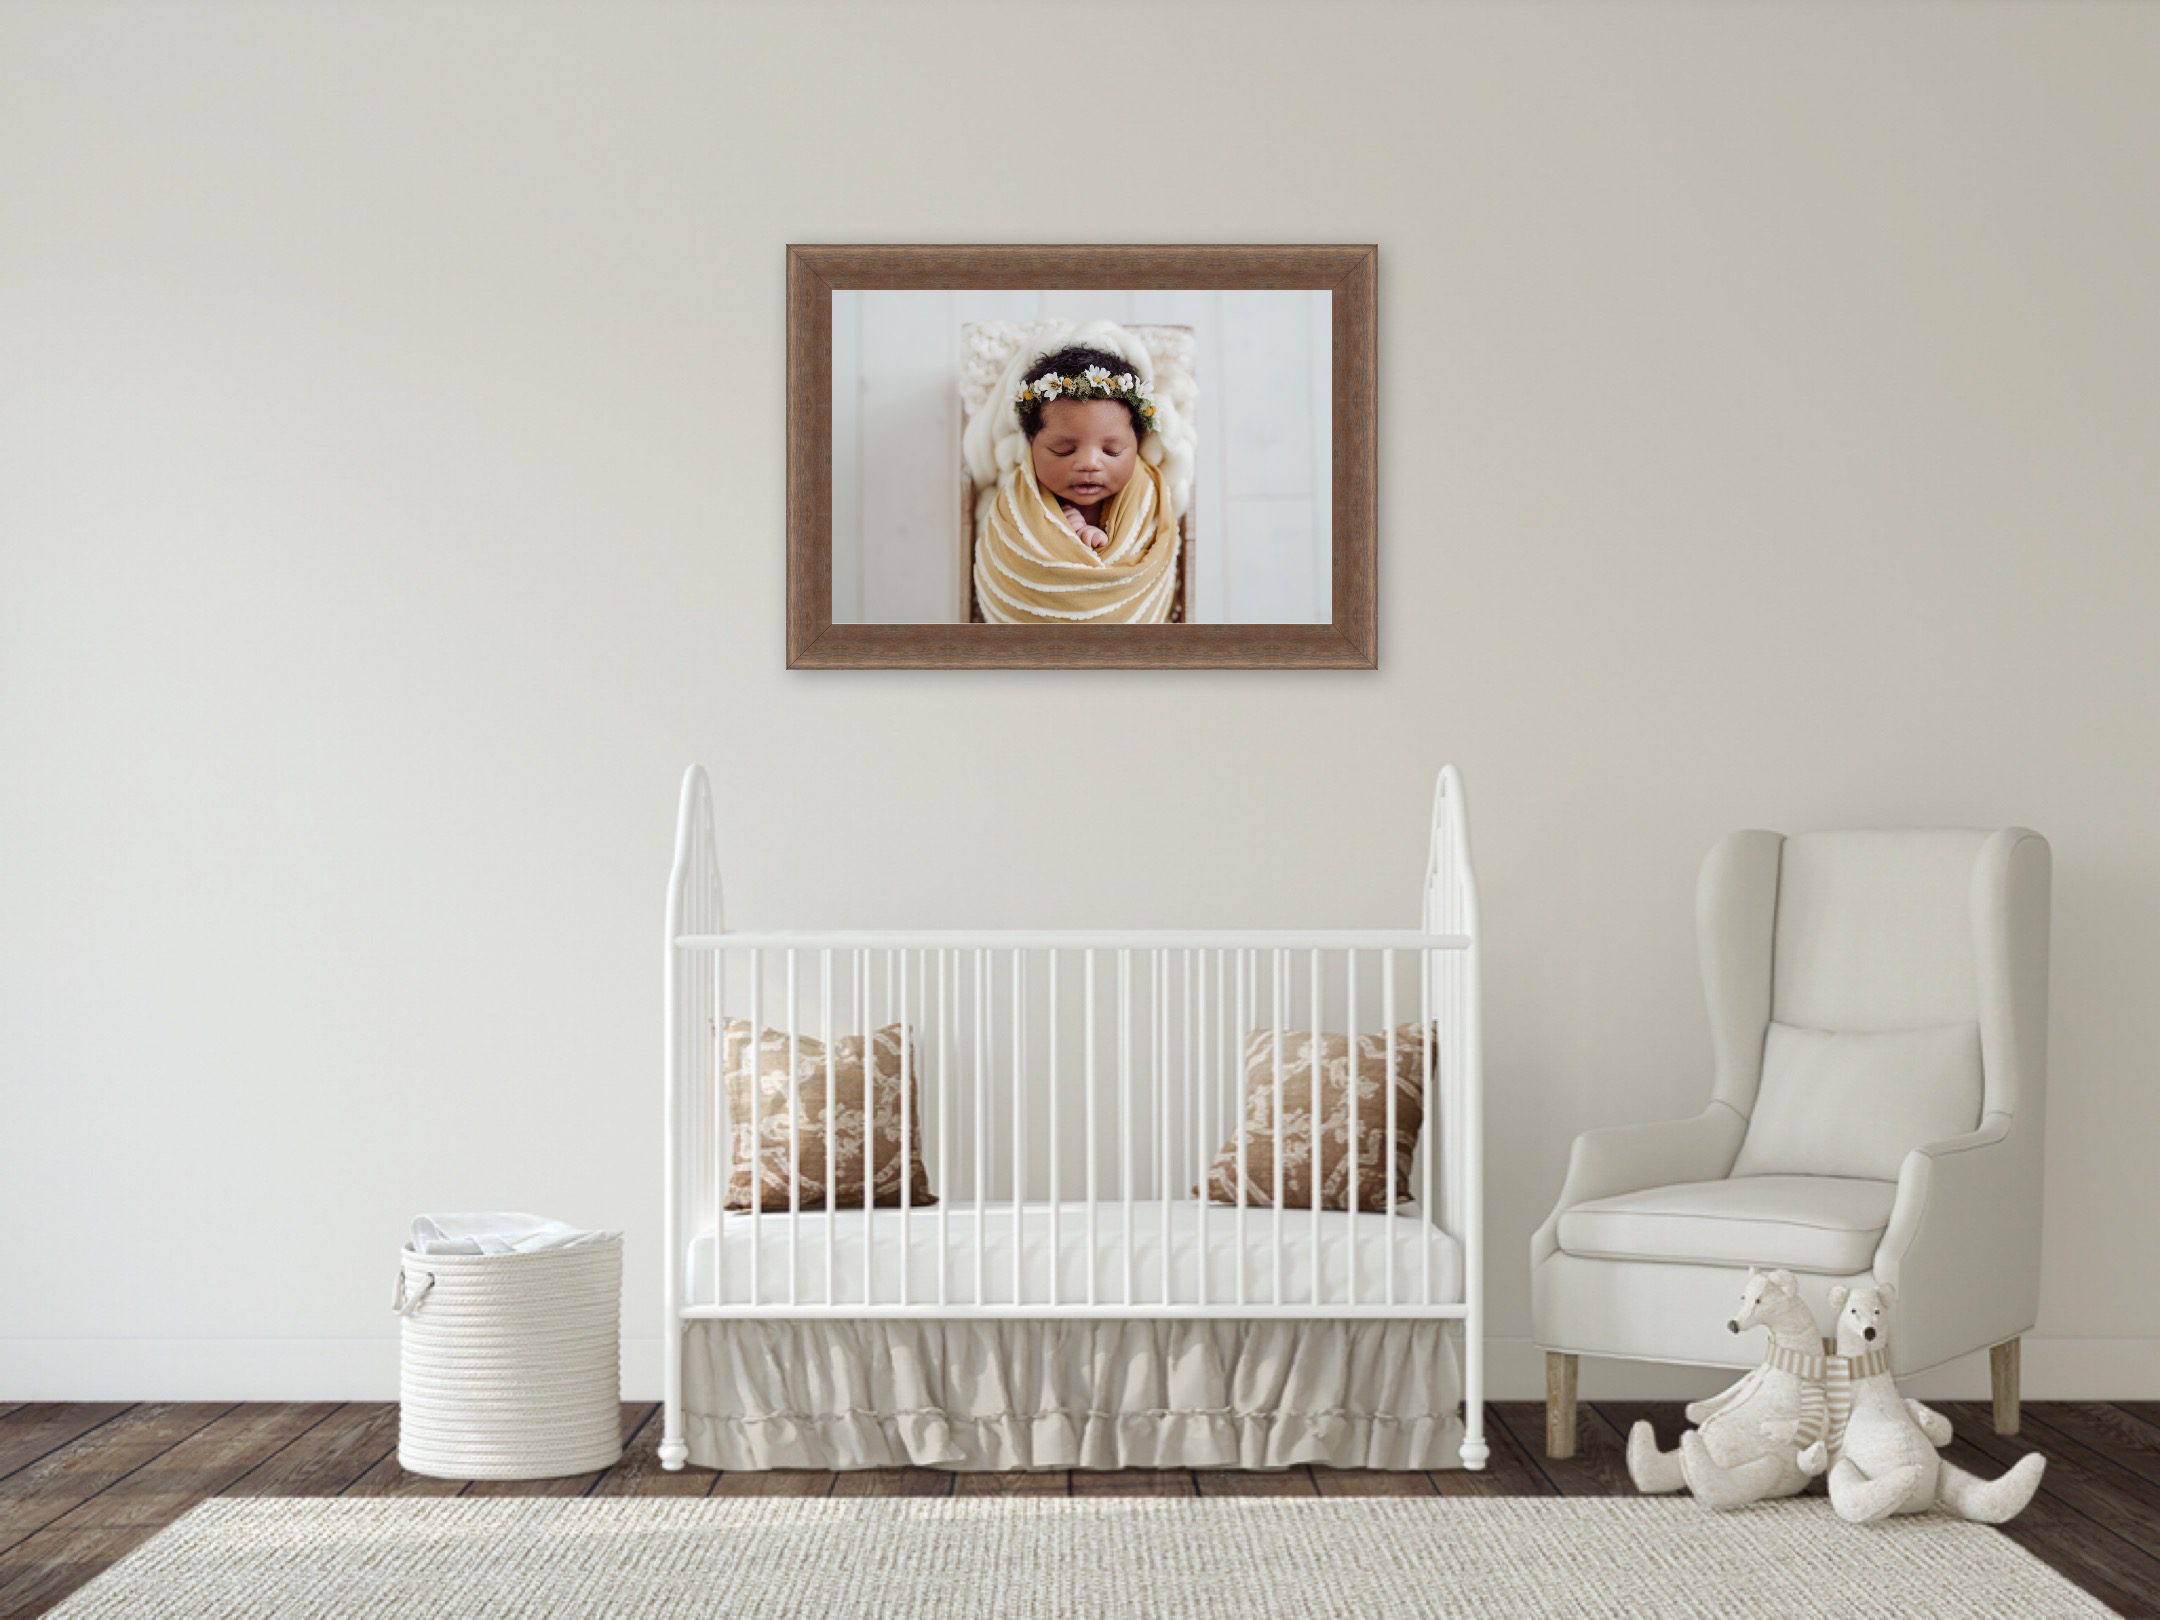 Framed large wall art for baby's nursery